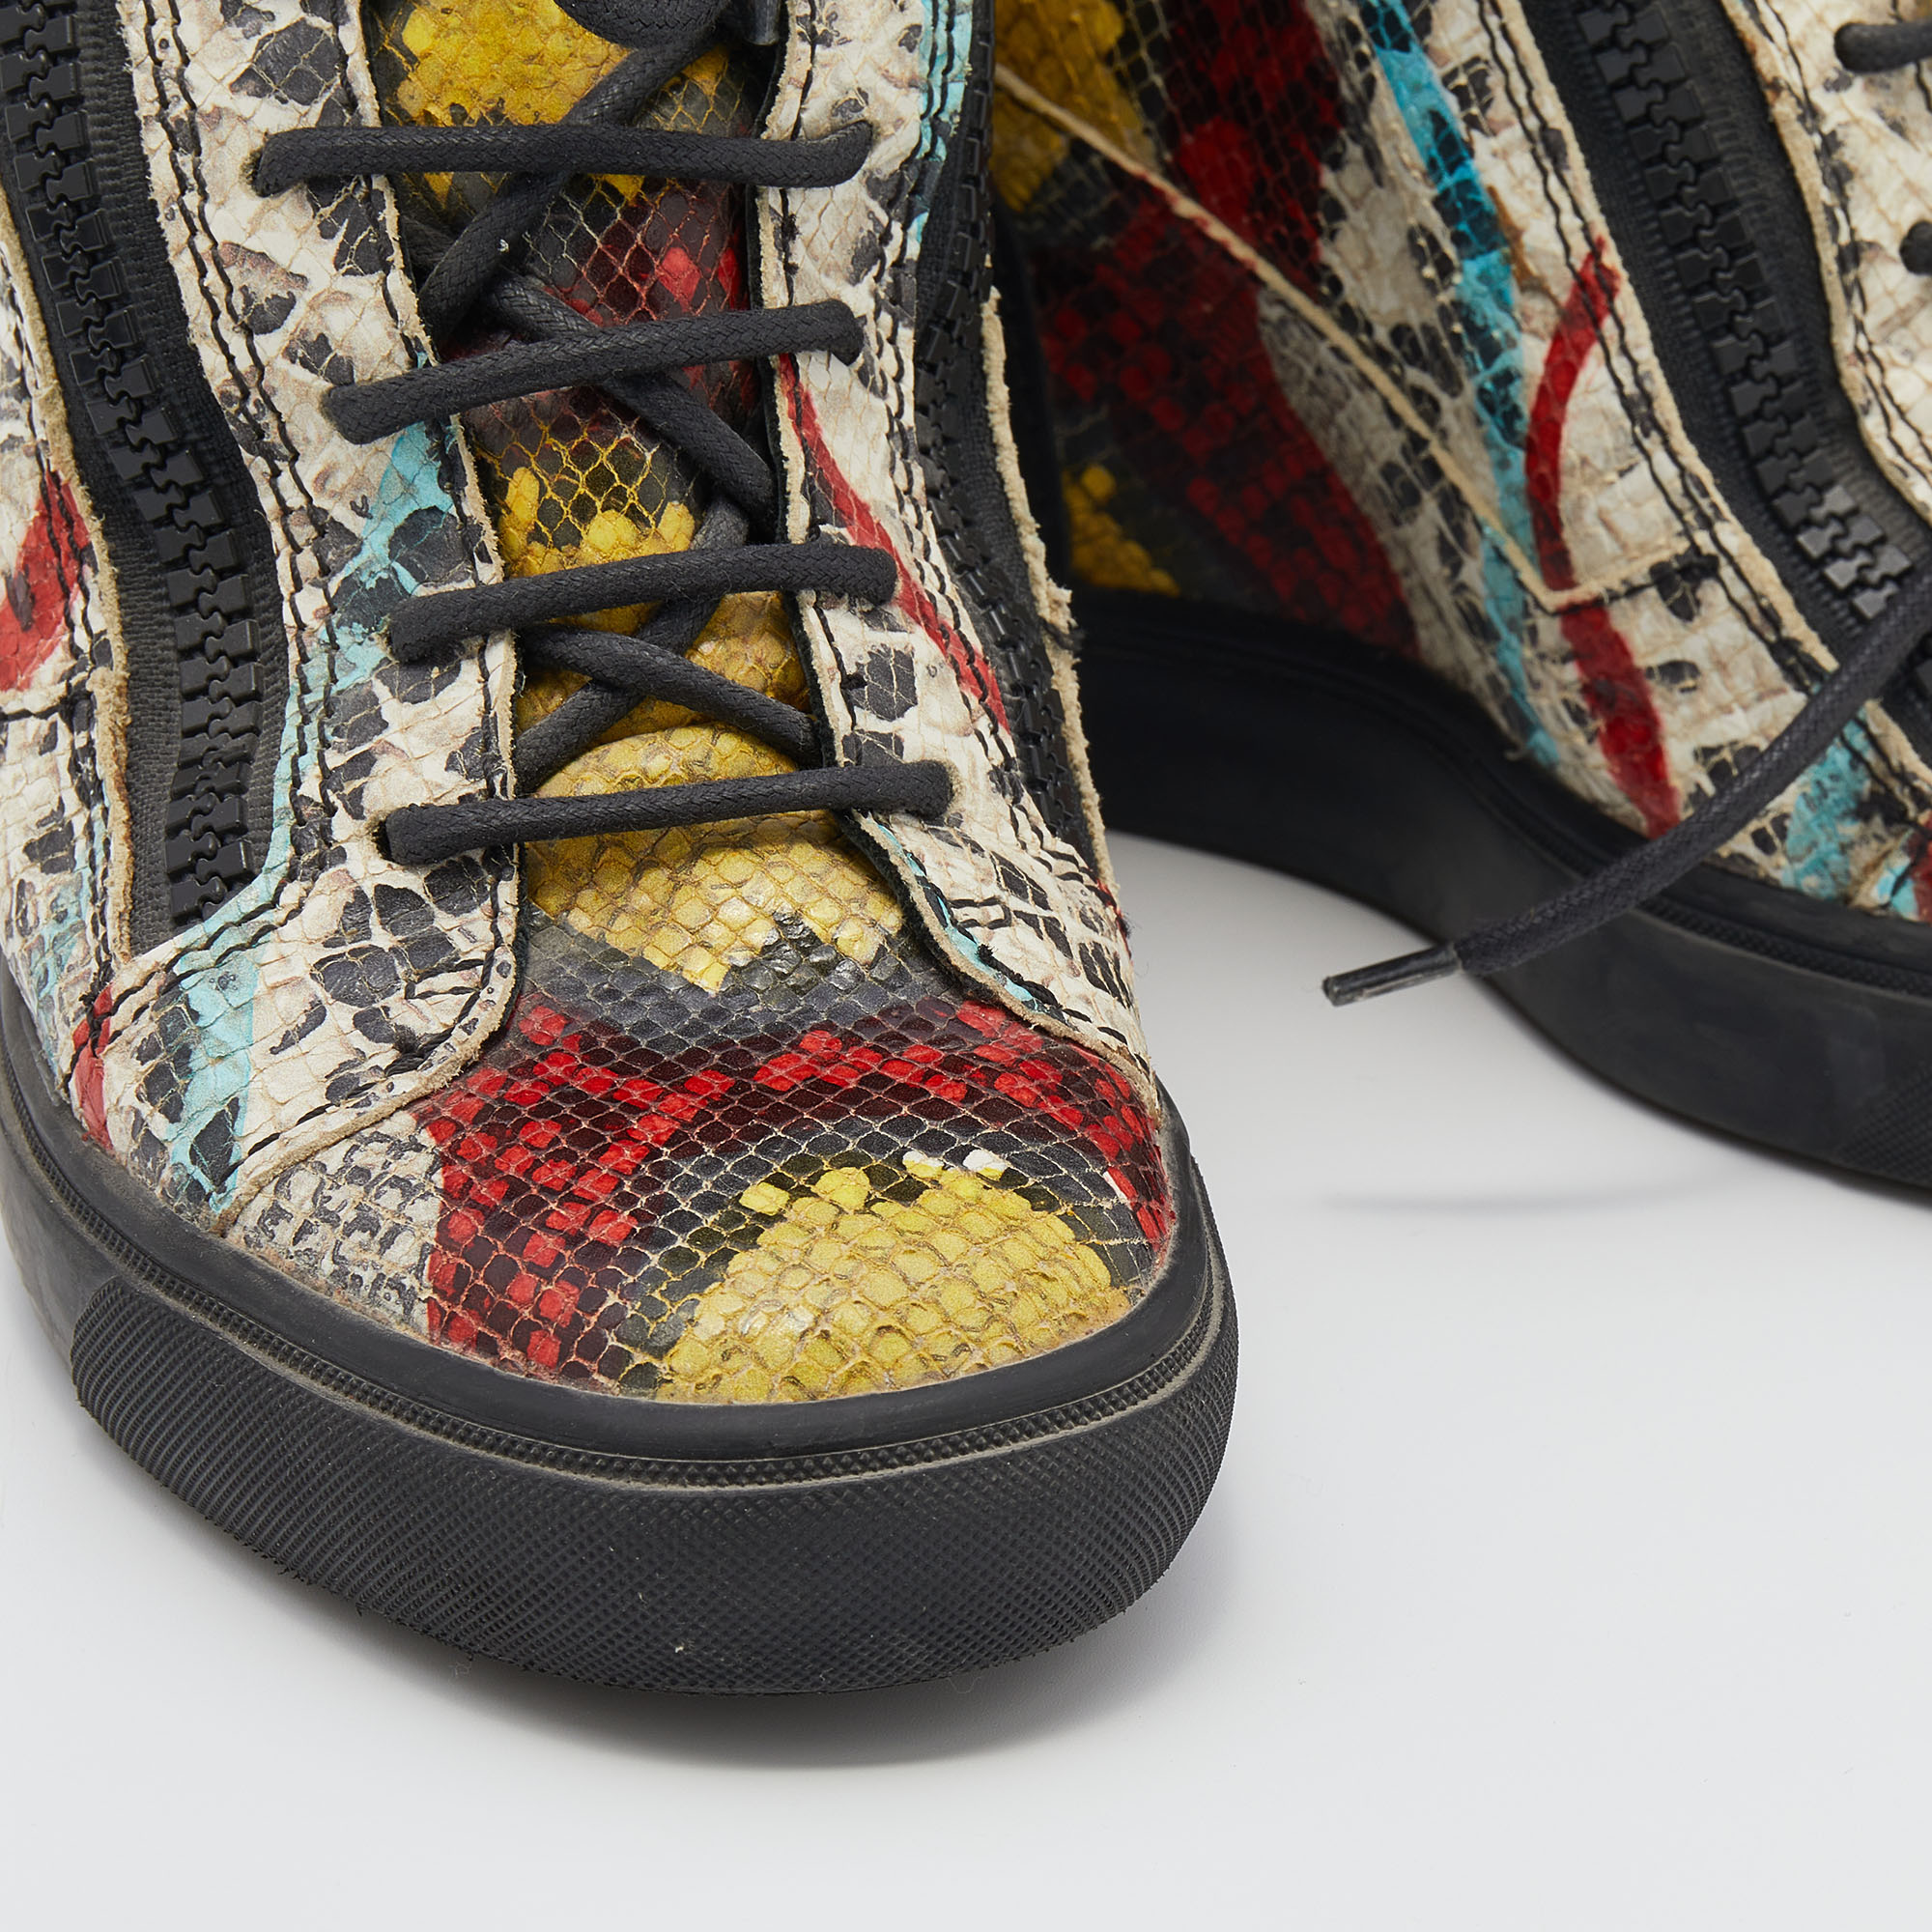 Giuseppe Zanotti Multicolor Snakeskin Embossed Leather High Toe Wedge Sneakers Size 39